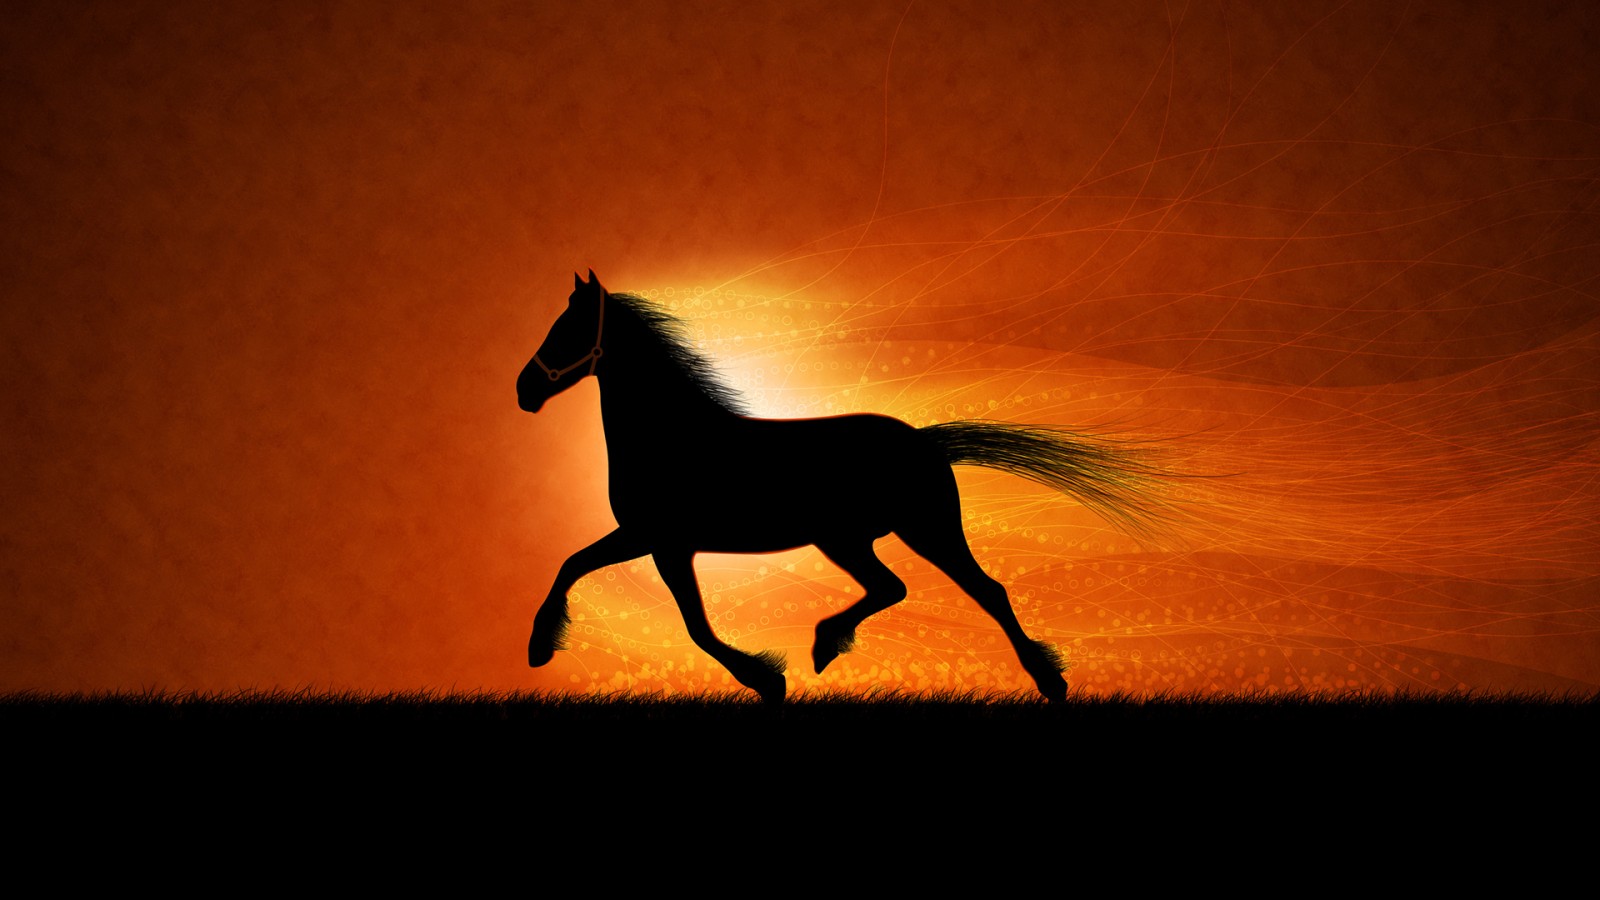 apus wallpapers hd,horse,mane,sky,silhouette,stallion